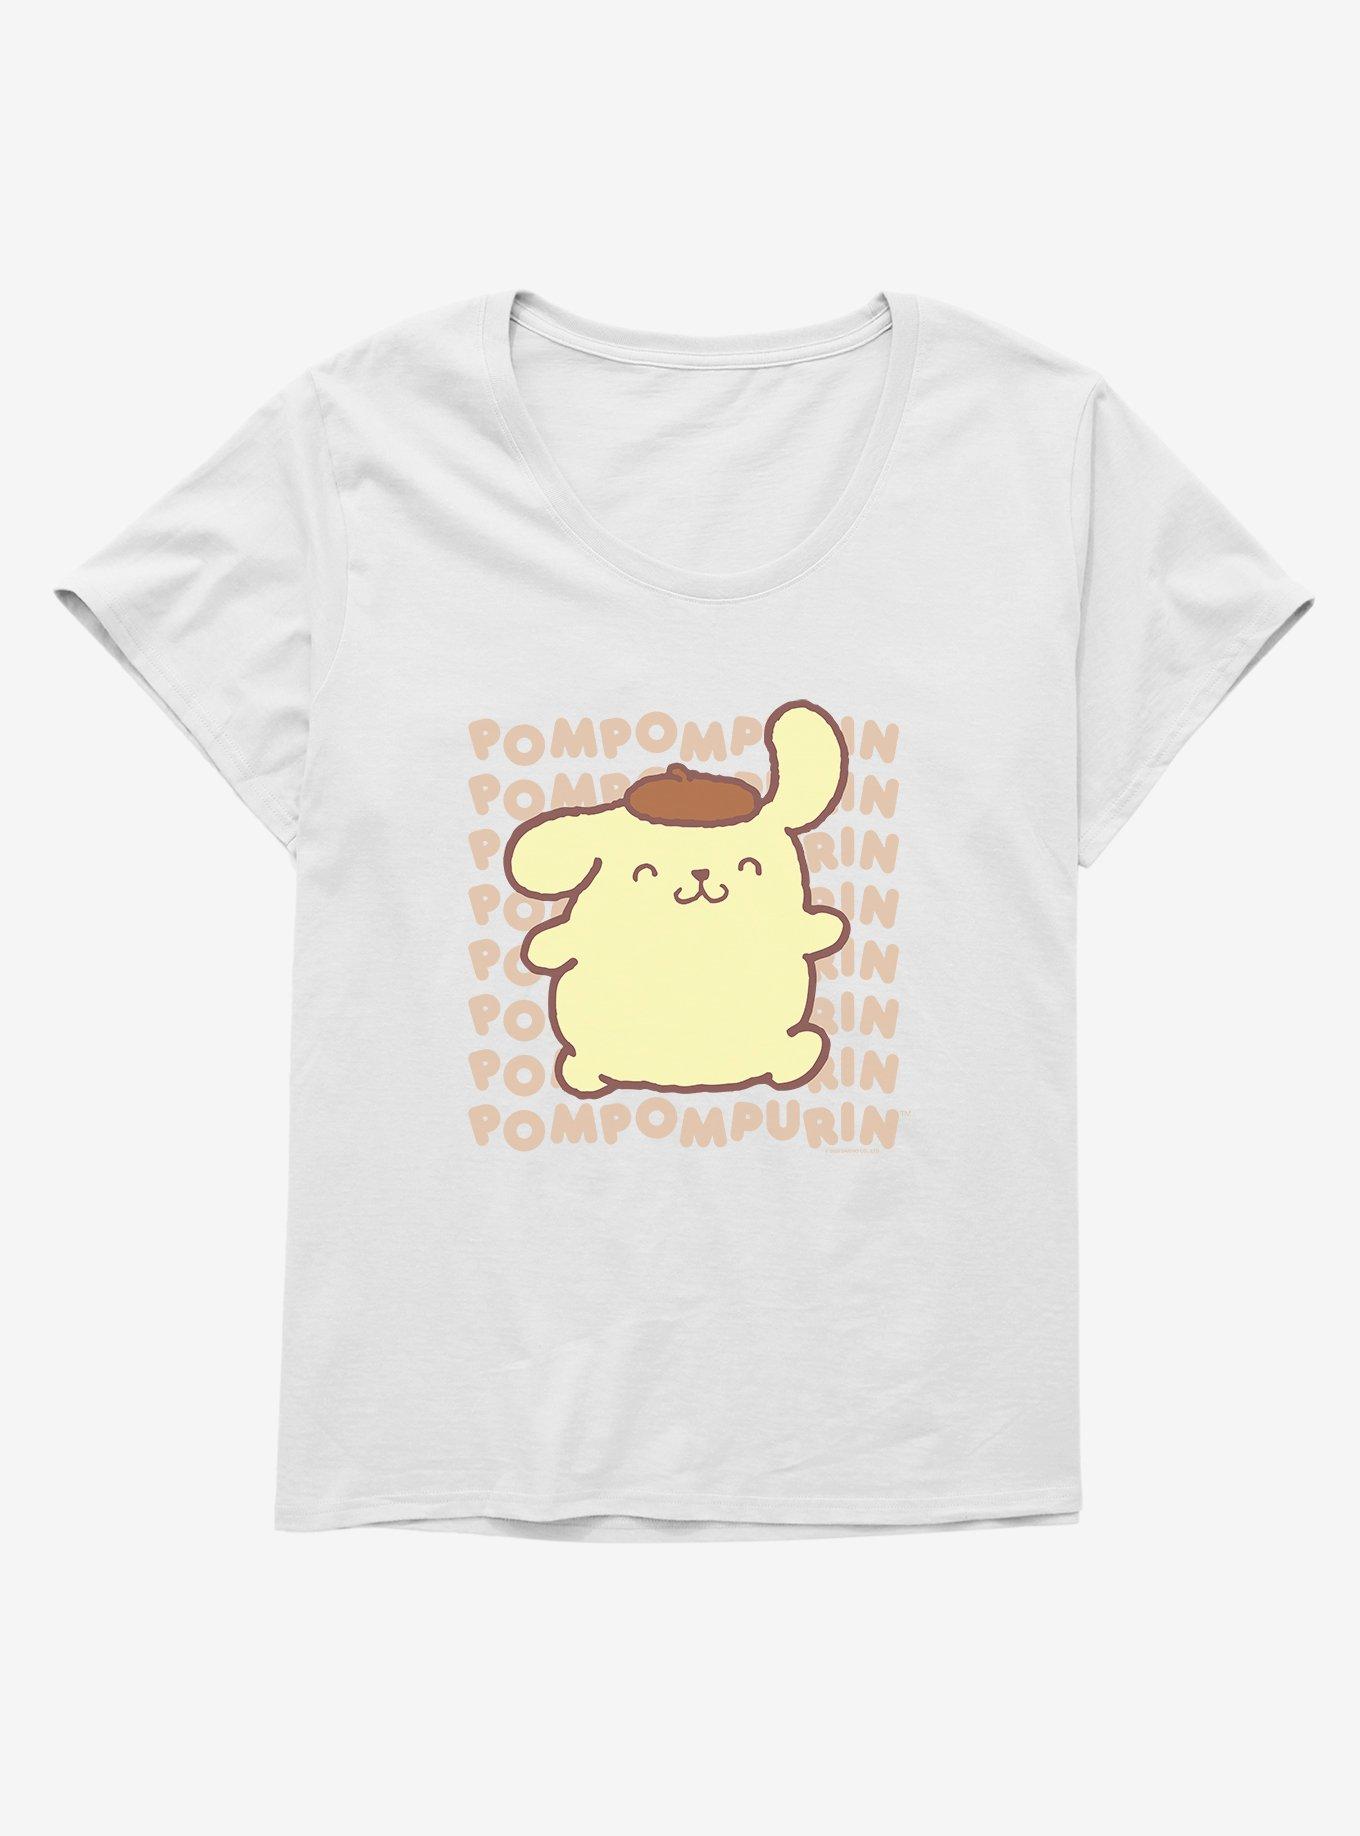 Pompompurin Character Name  Girls T-Shirt Plus